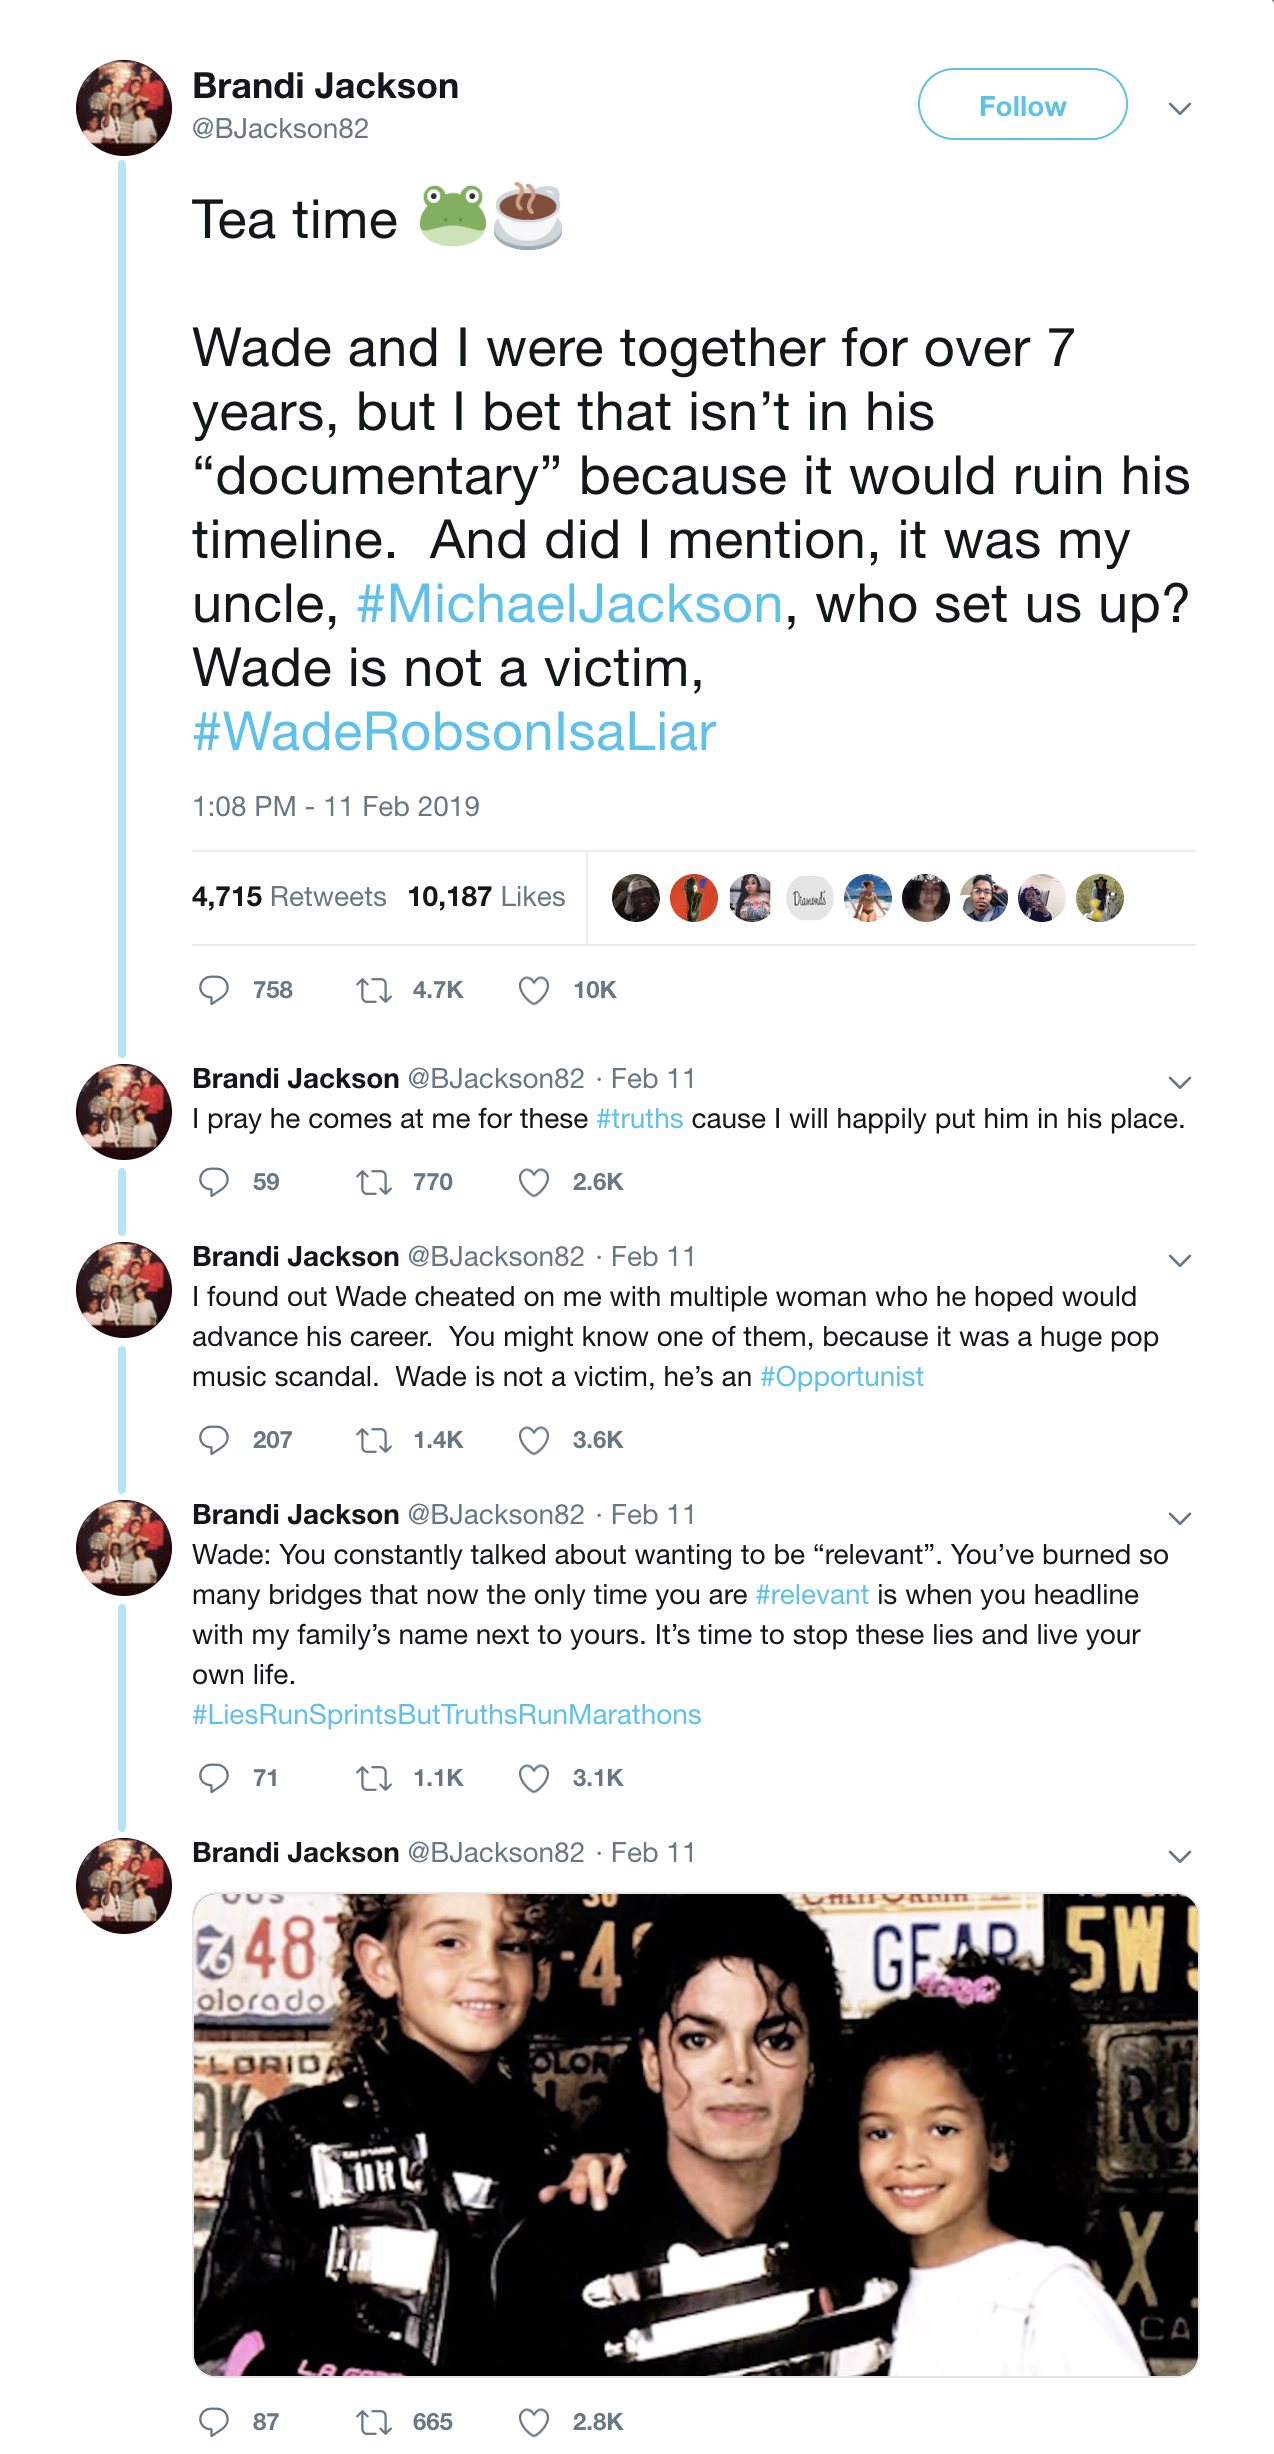 Twitter thread of Brandi Jackson's tweets about Wade Robson